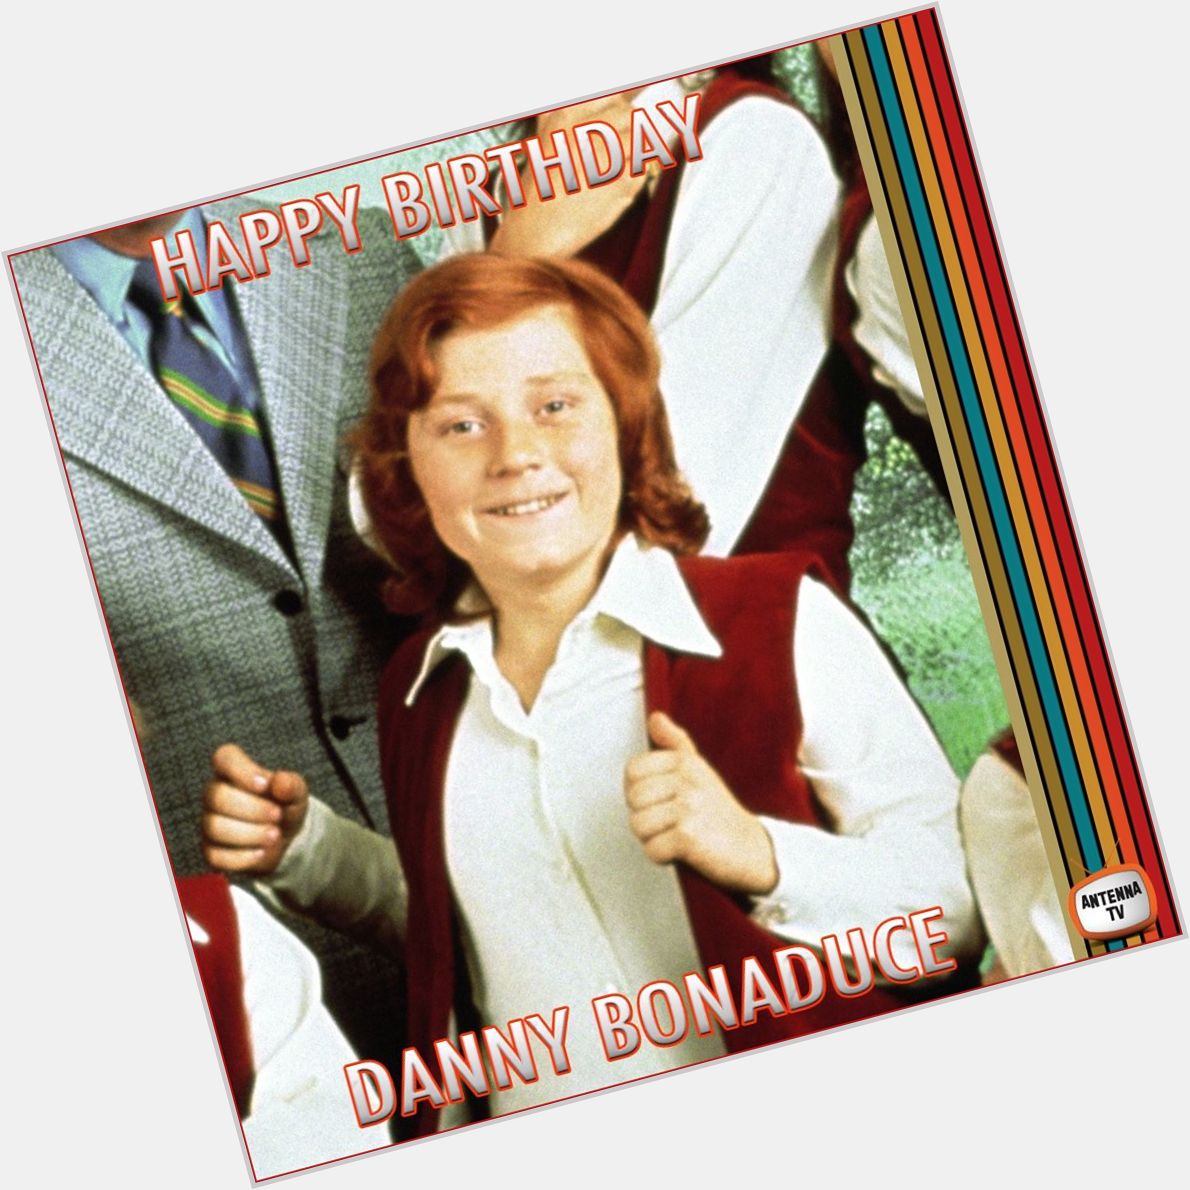 Happy 61st birthday to Danny Bonaduce of The Partridge Family 